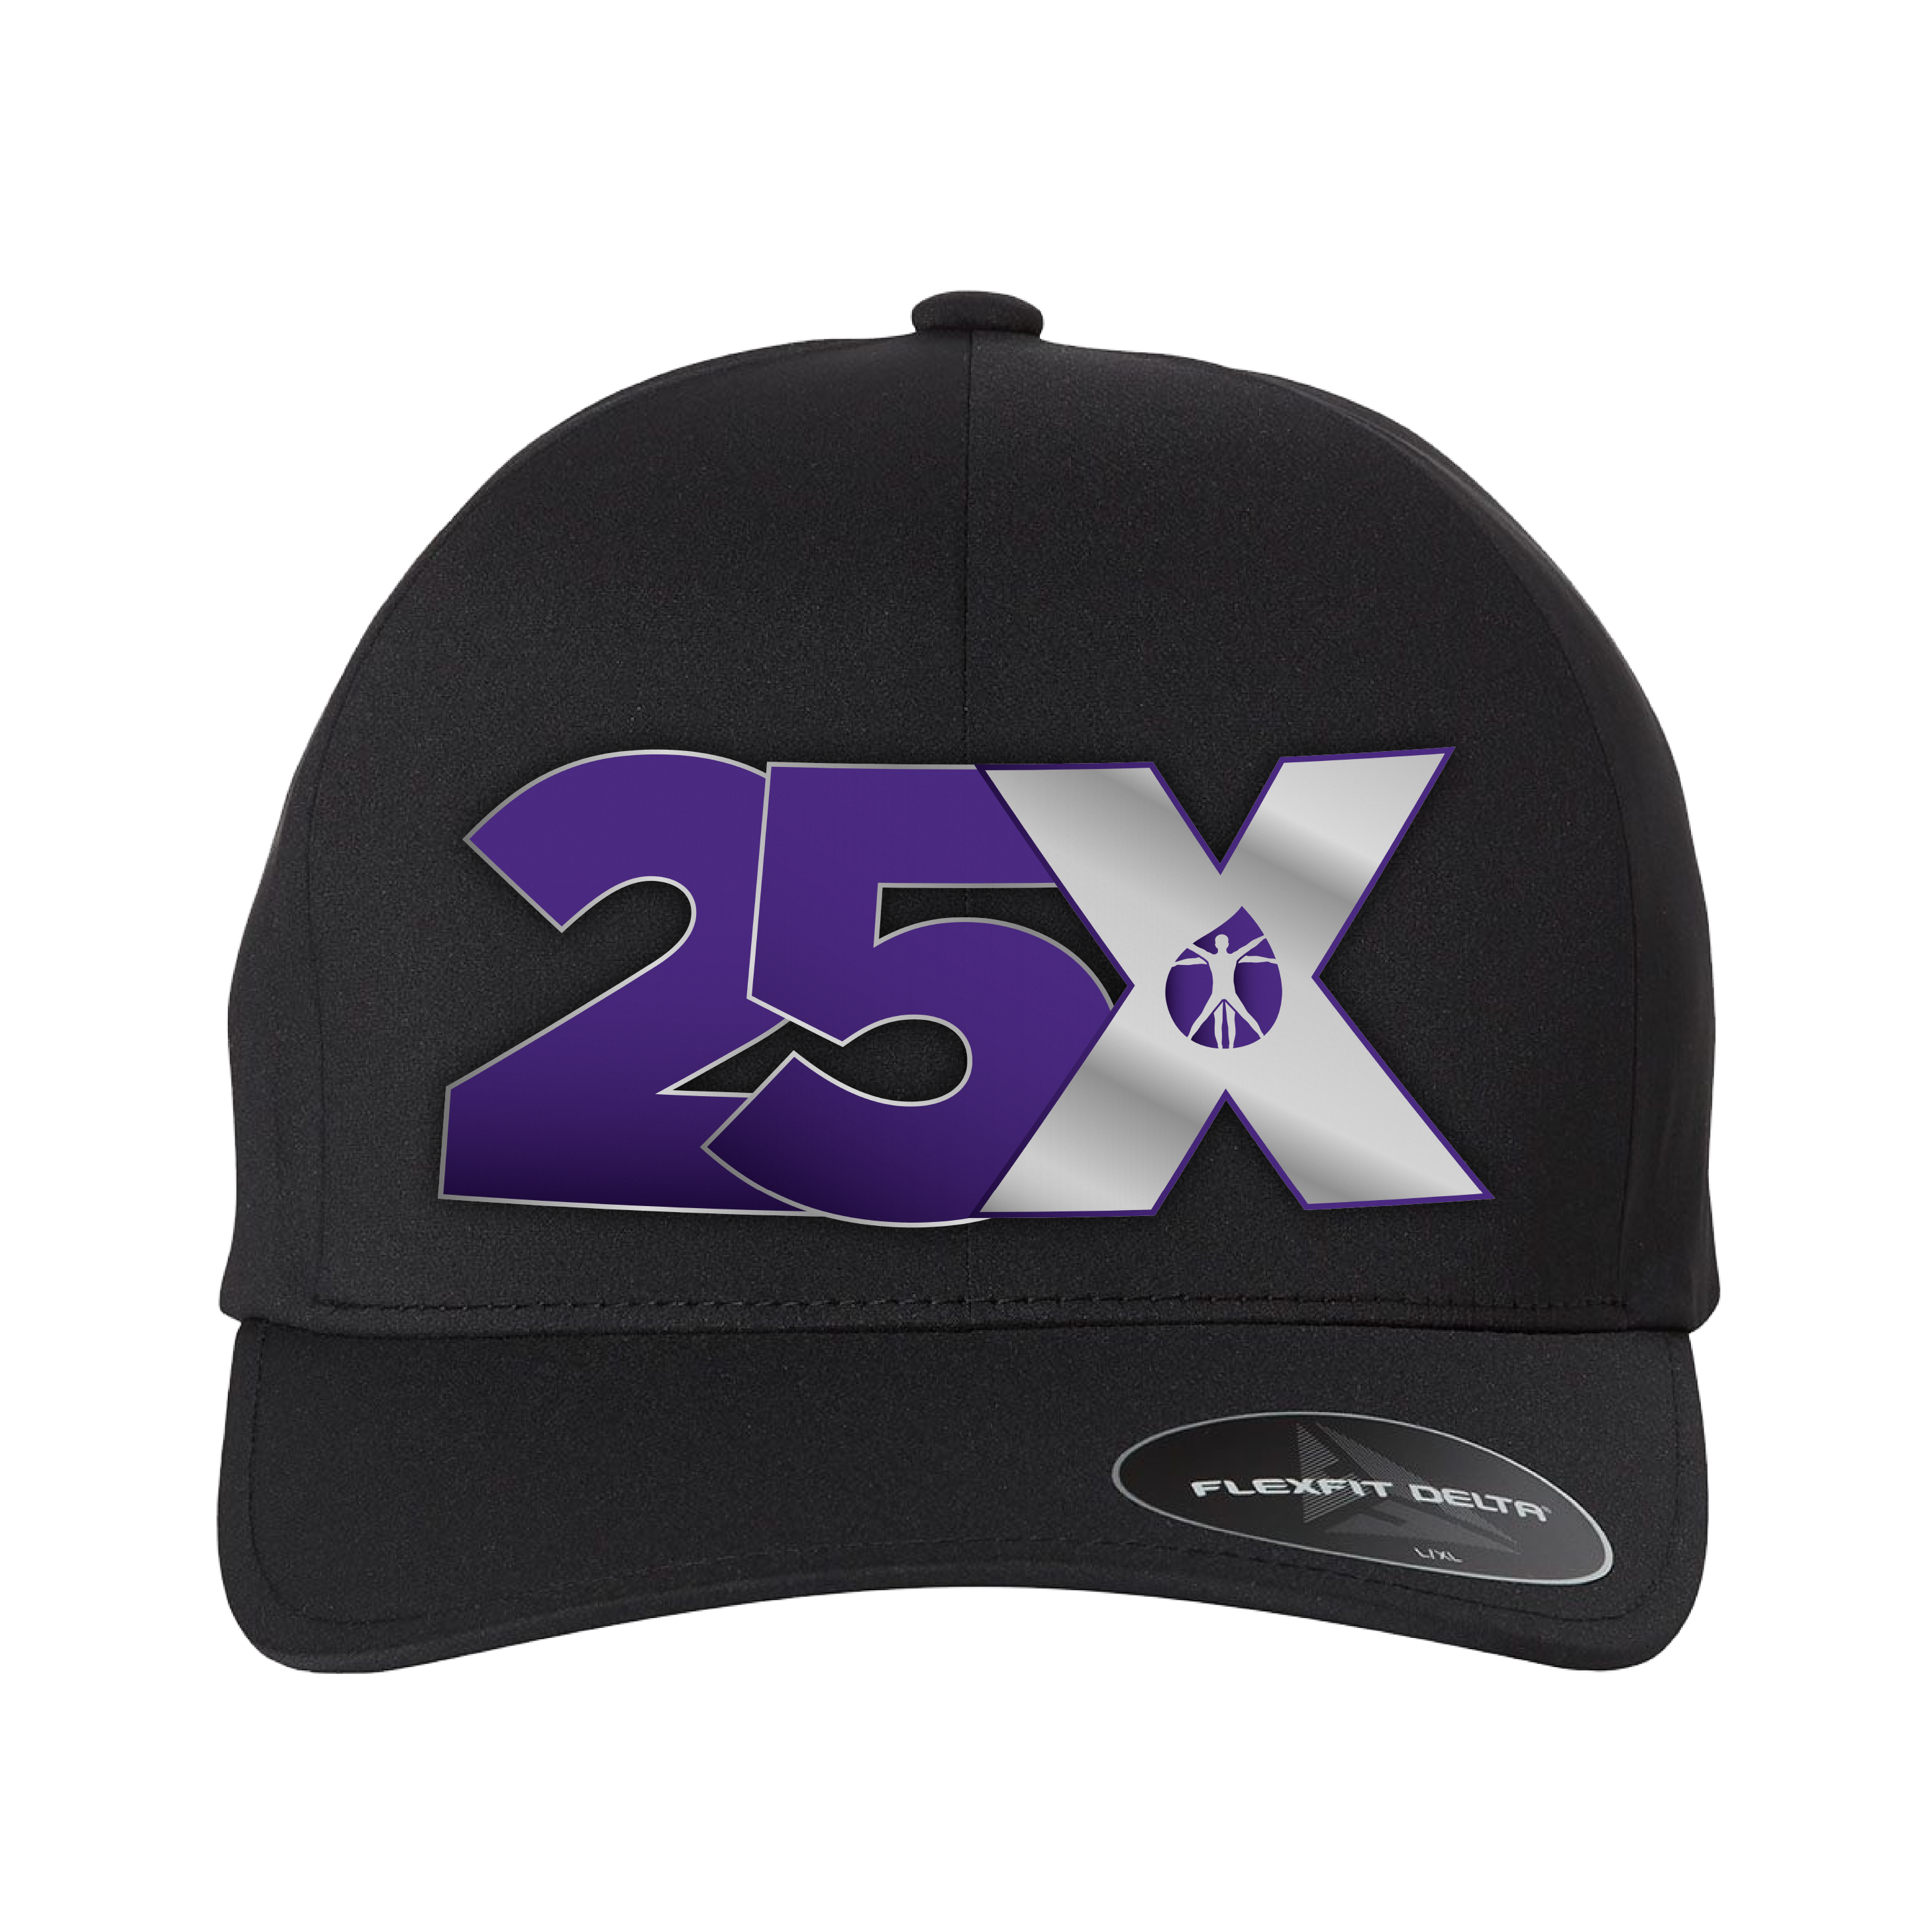 25X Builder Pack Hat